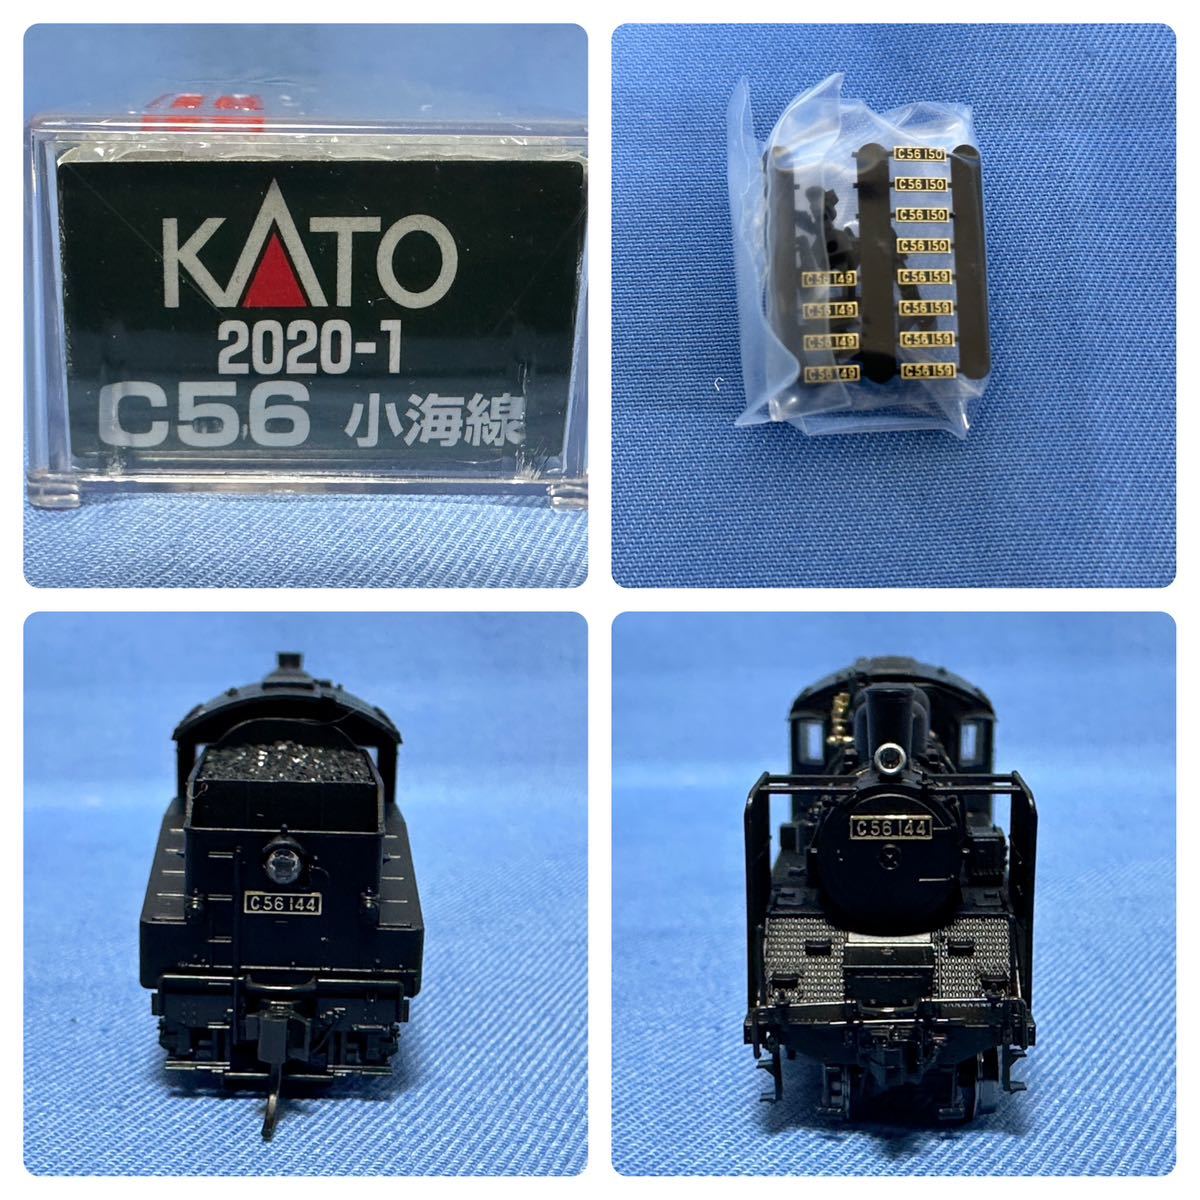 KATO 2020-1 C56 小海線 蒸気機関車 カトー Nゲージ 9mm 鉄道模型 電車 希少 中古 美品 _画像7